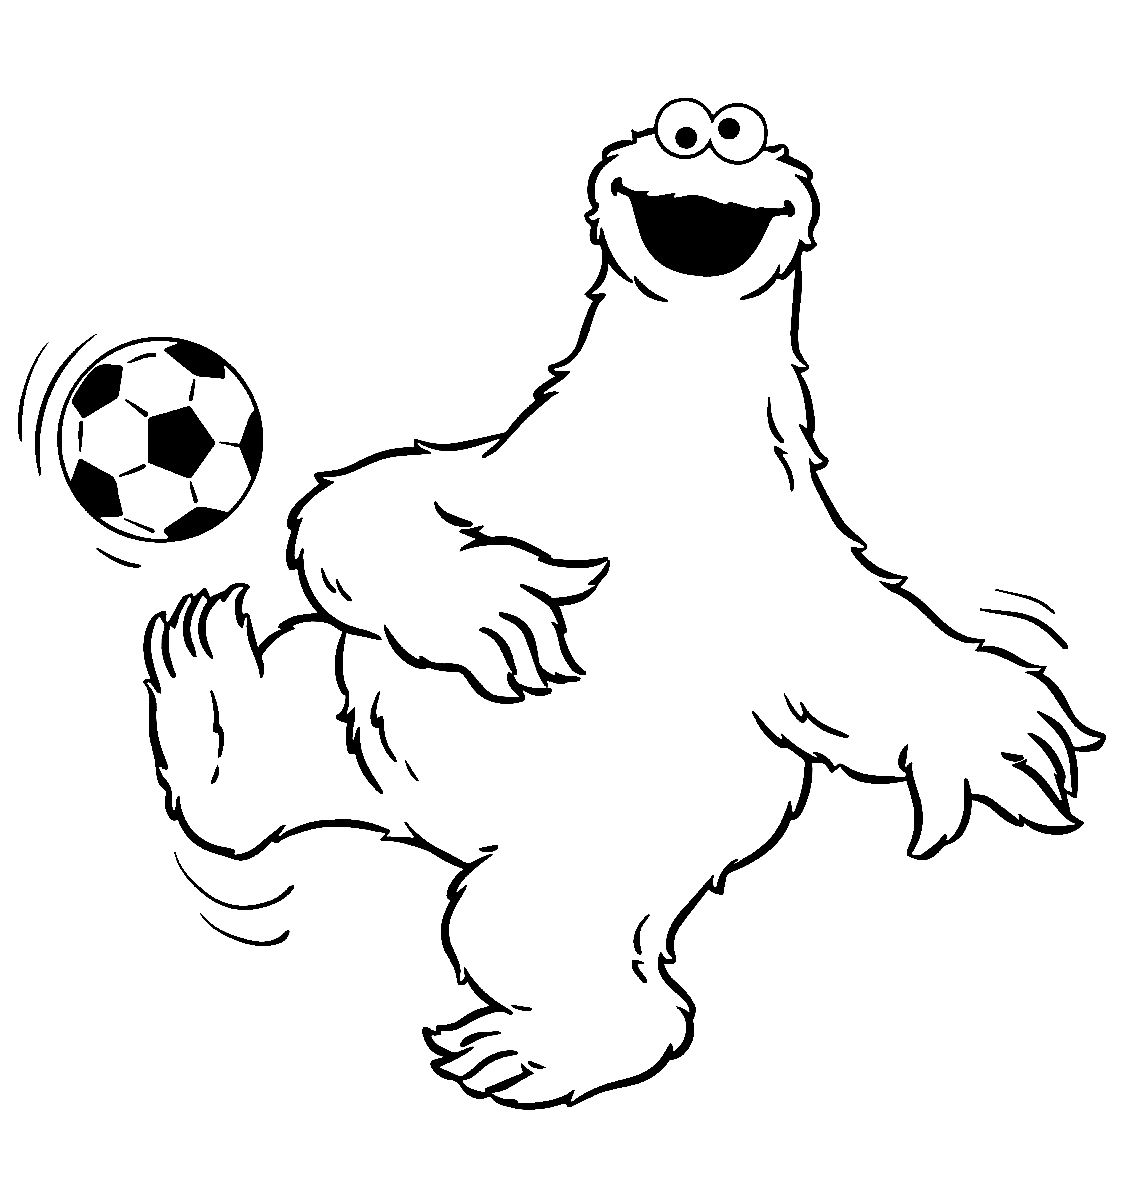 Cookie Monster joue au football depuis le football